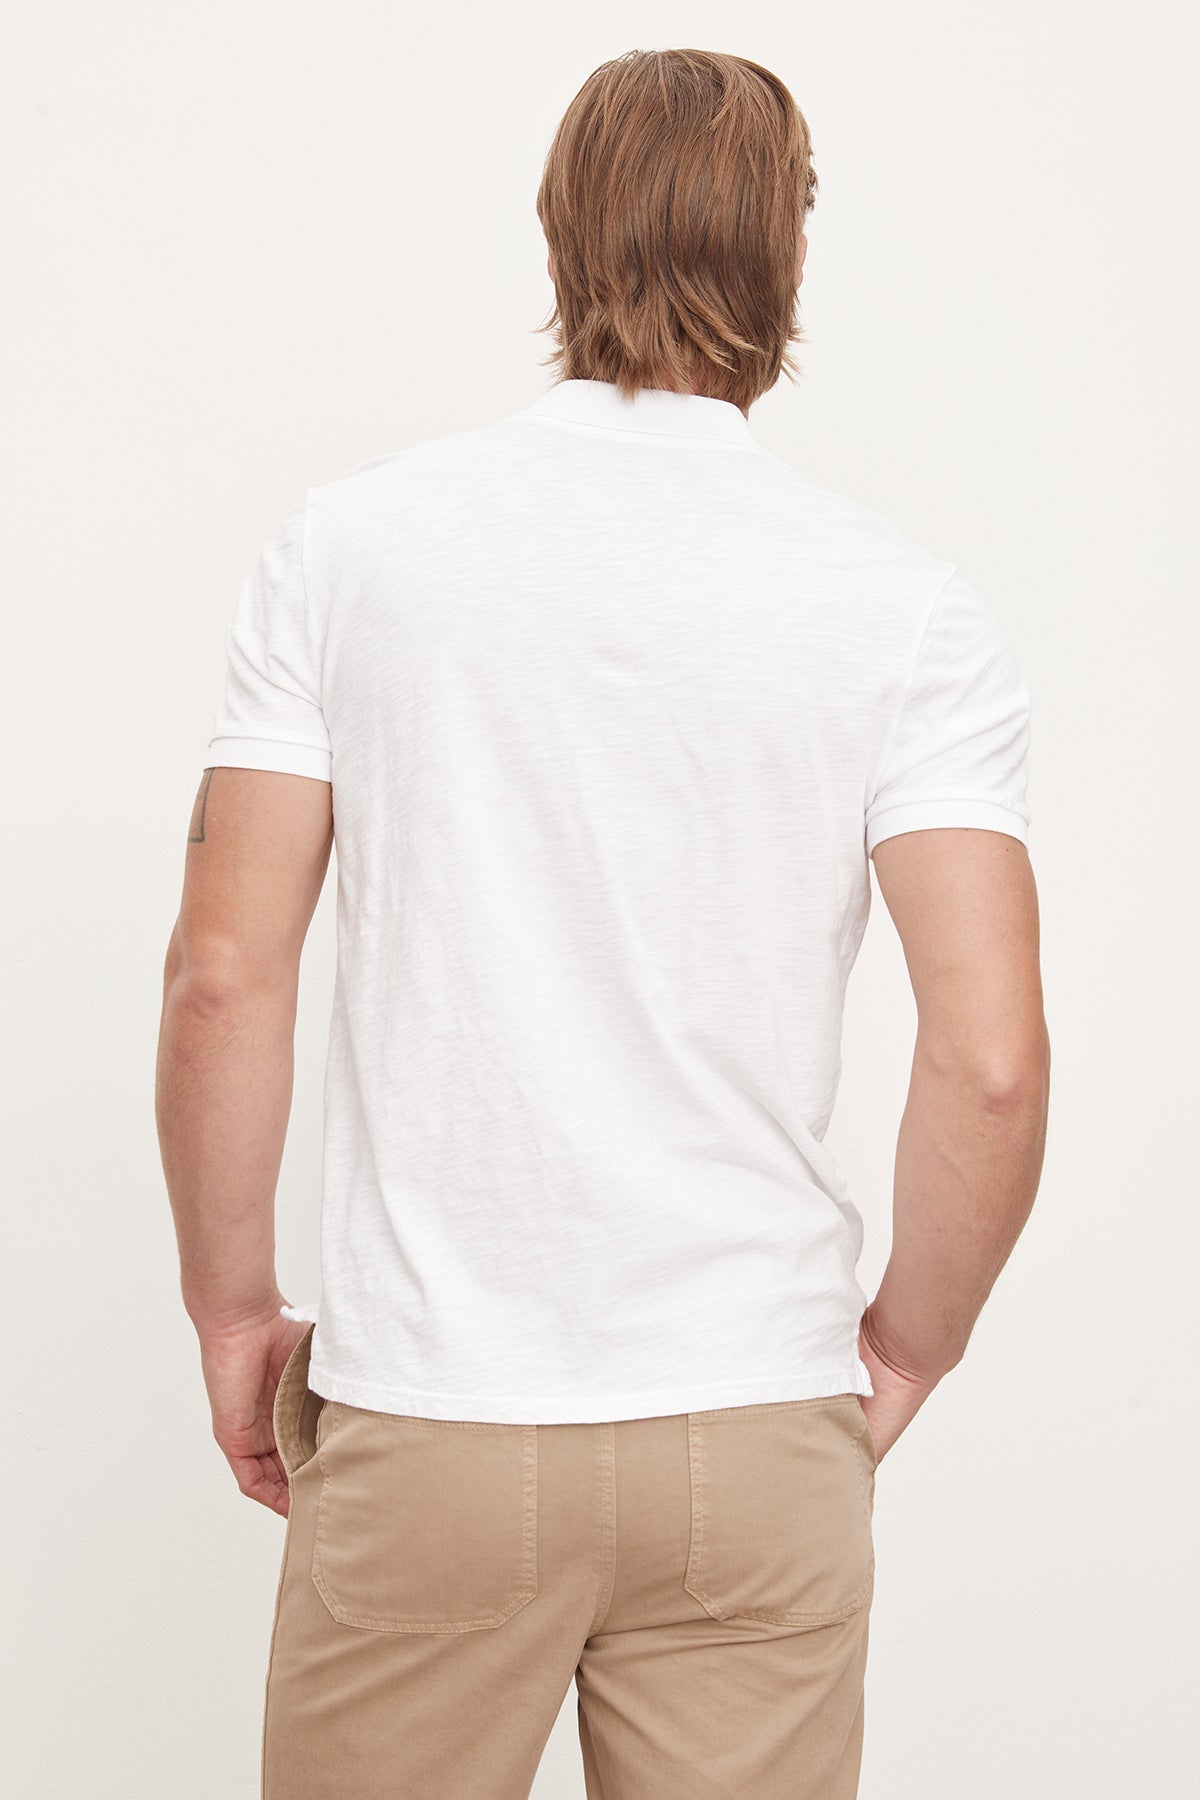 The back of a man wearing a Velvet by Graham & Spencer white cotton slub NIKO POLO t-shirt and khaki pants.-36009424879809